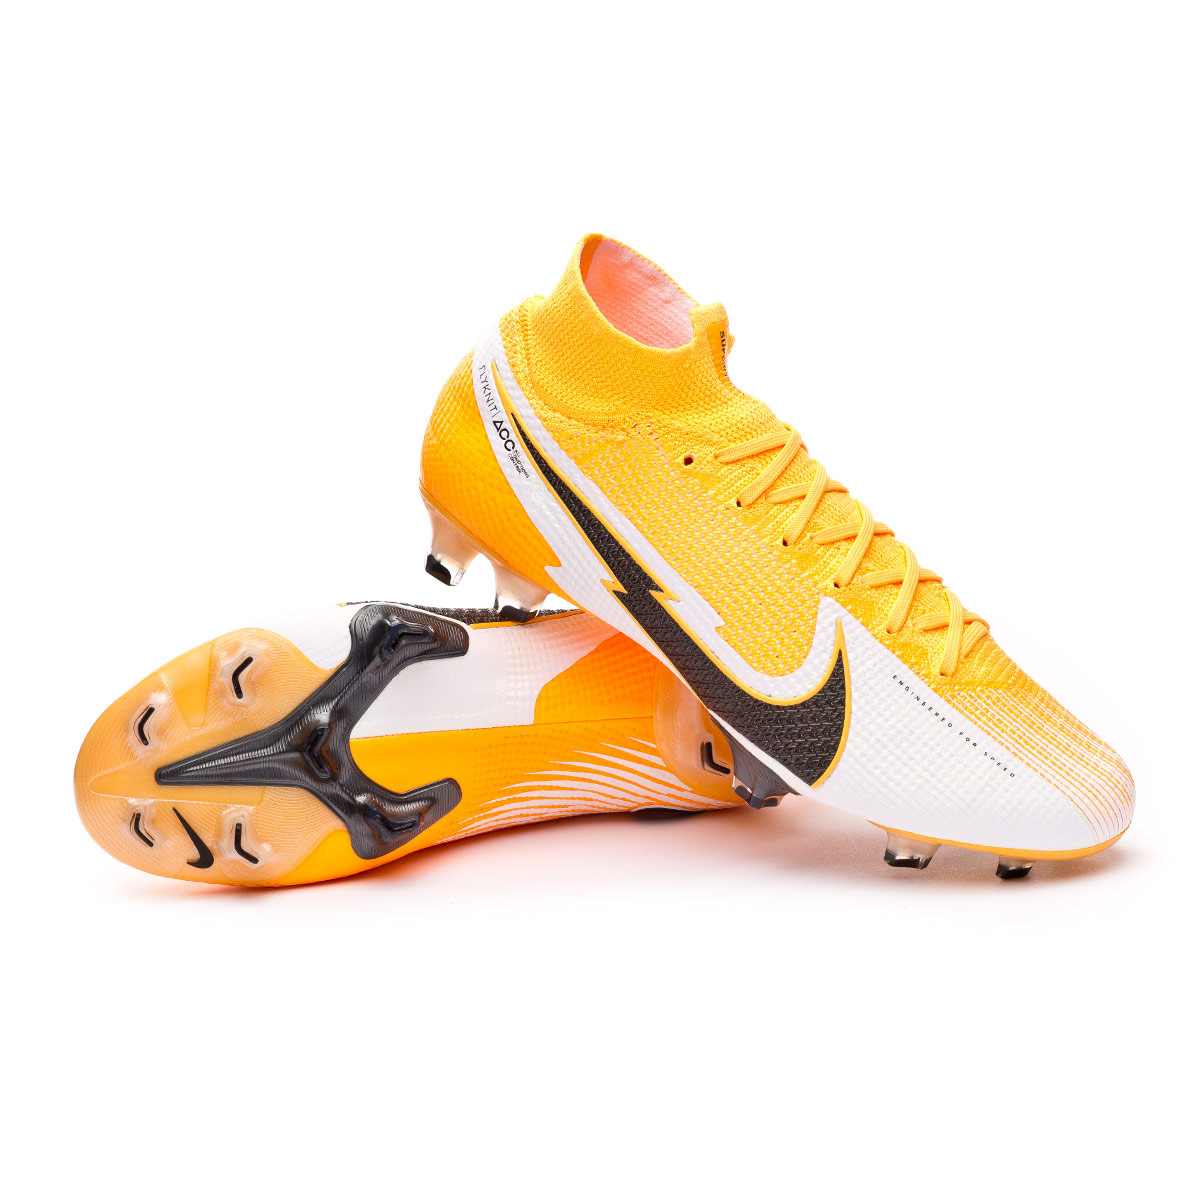 Bota de fútbol Nike Mercurial Superfly VII Elite FG Laser  orange-Black-White-Laser orange - Tienda de fútbol Fútbol Emotion